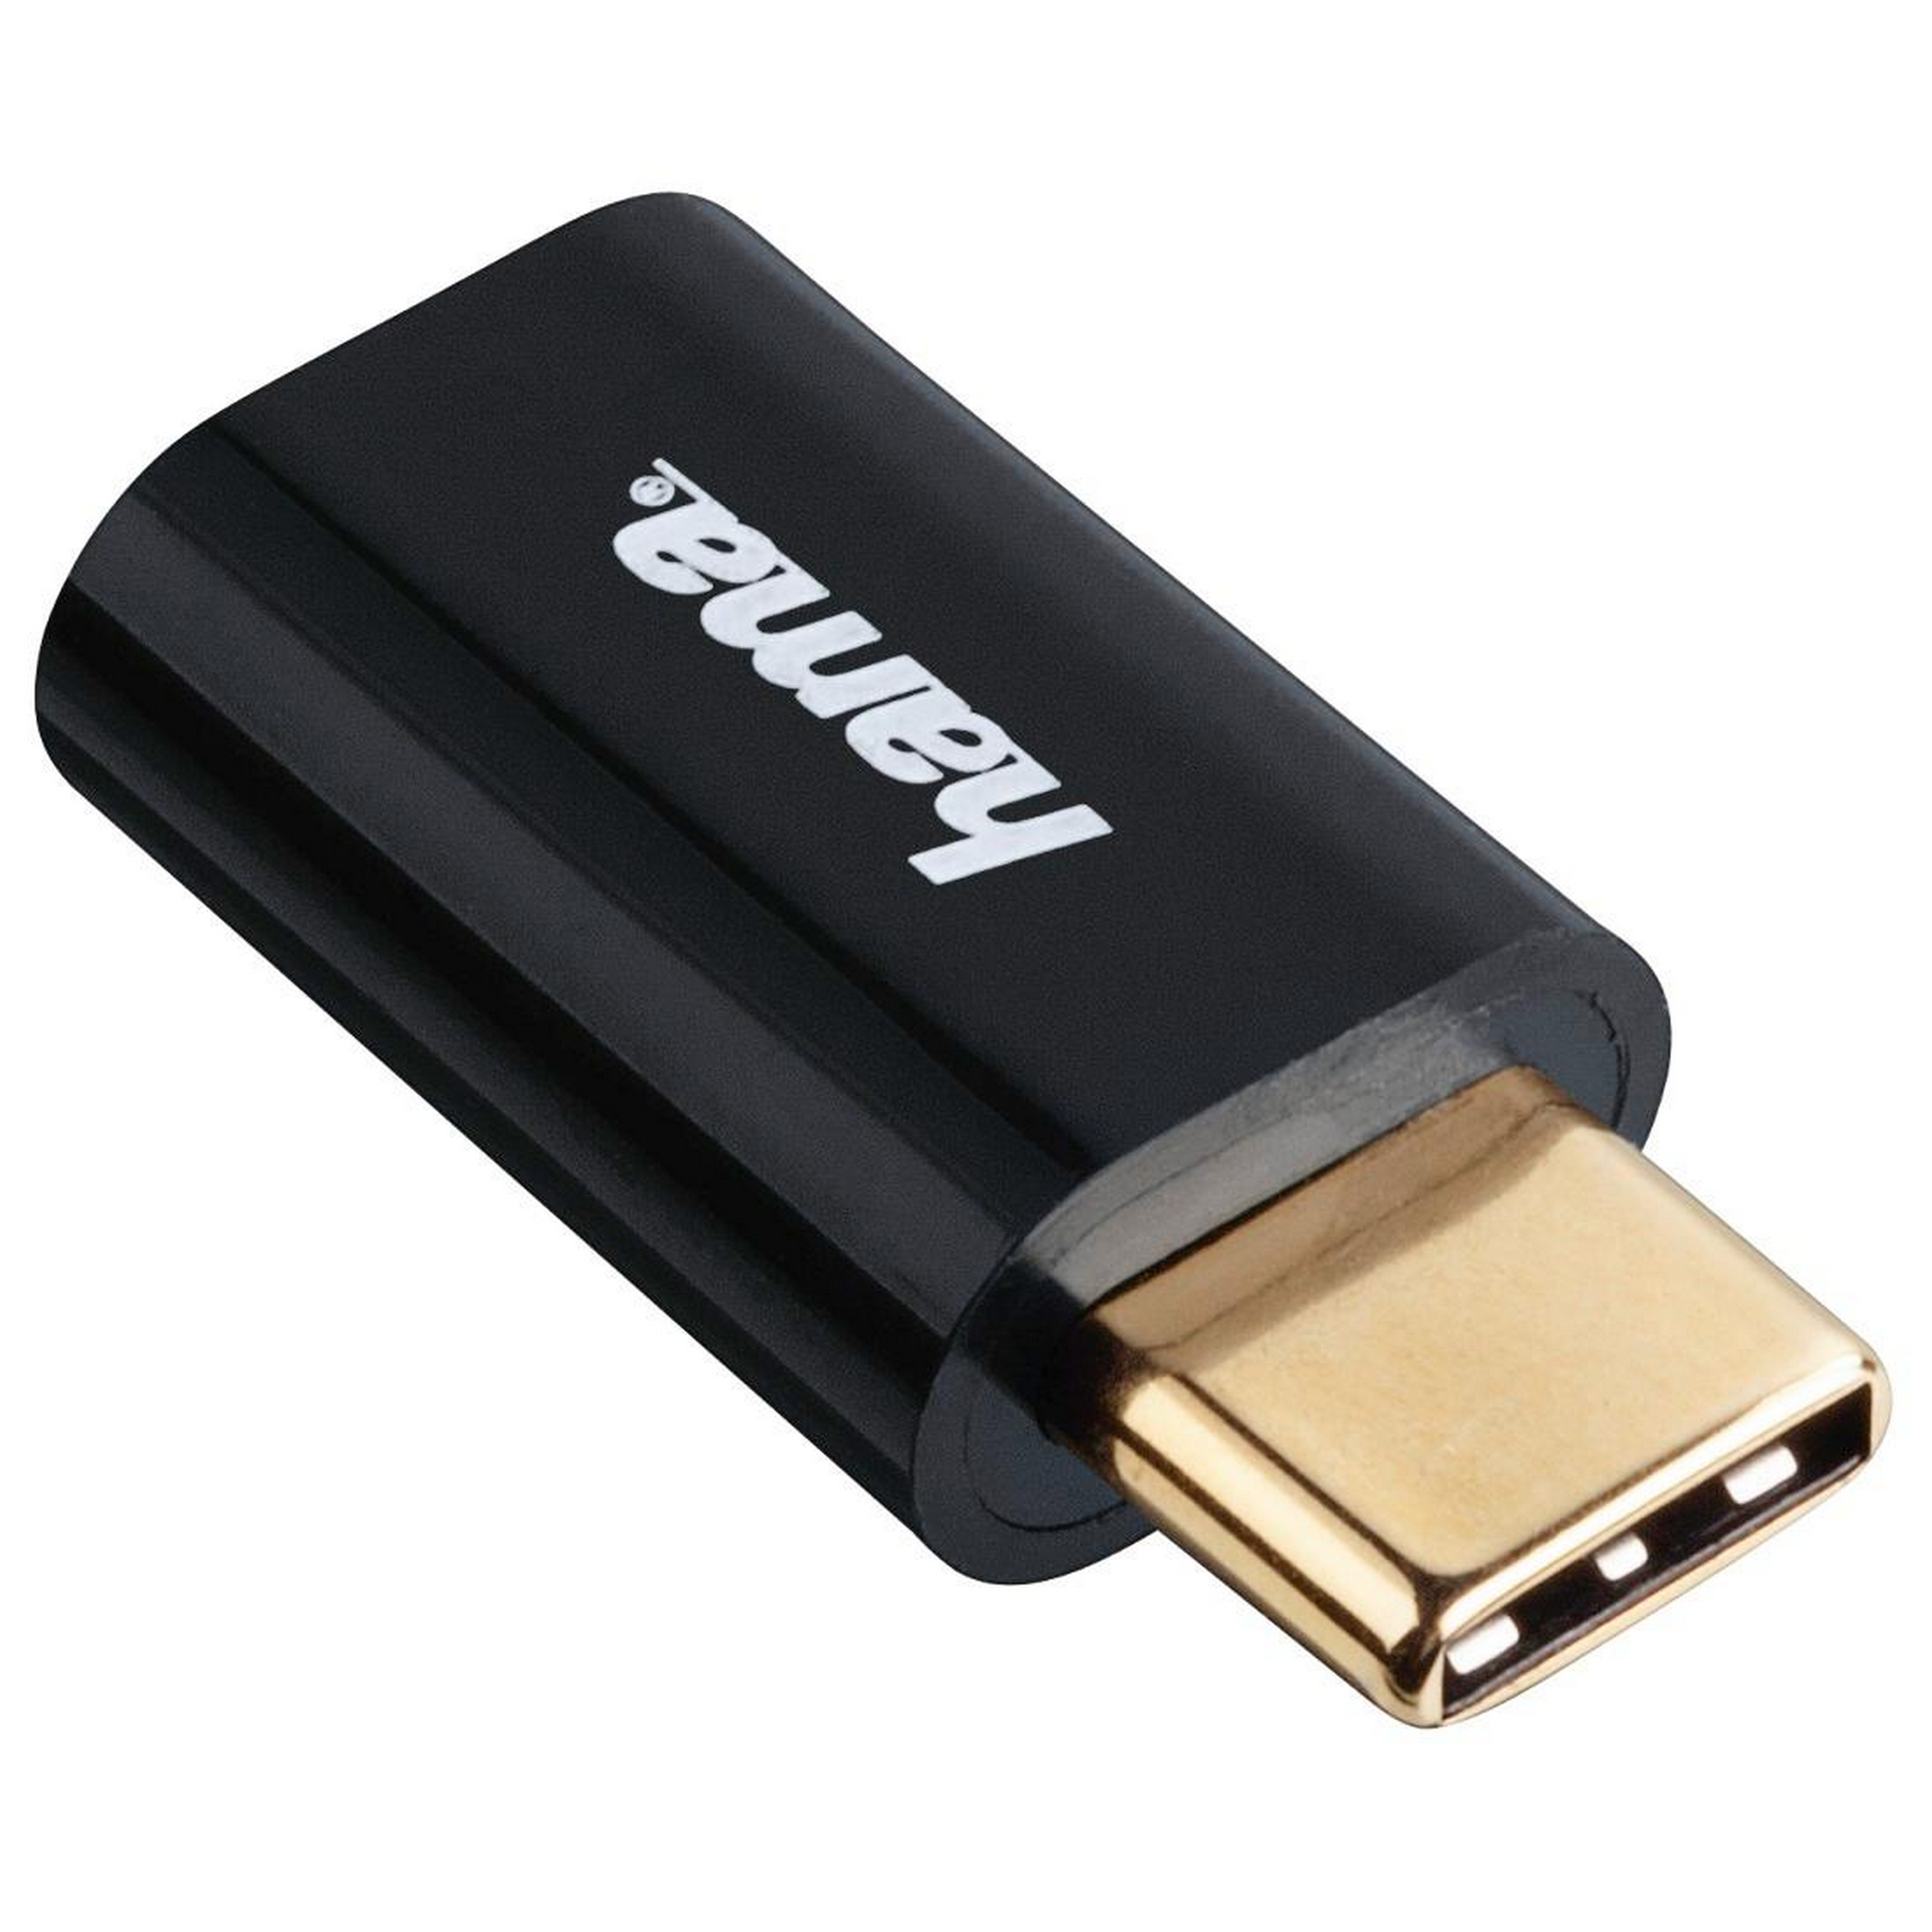 Adapter schwarz/vergoldet Micro-USB auf USB-C-Stecker + product picture